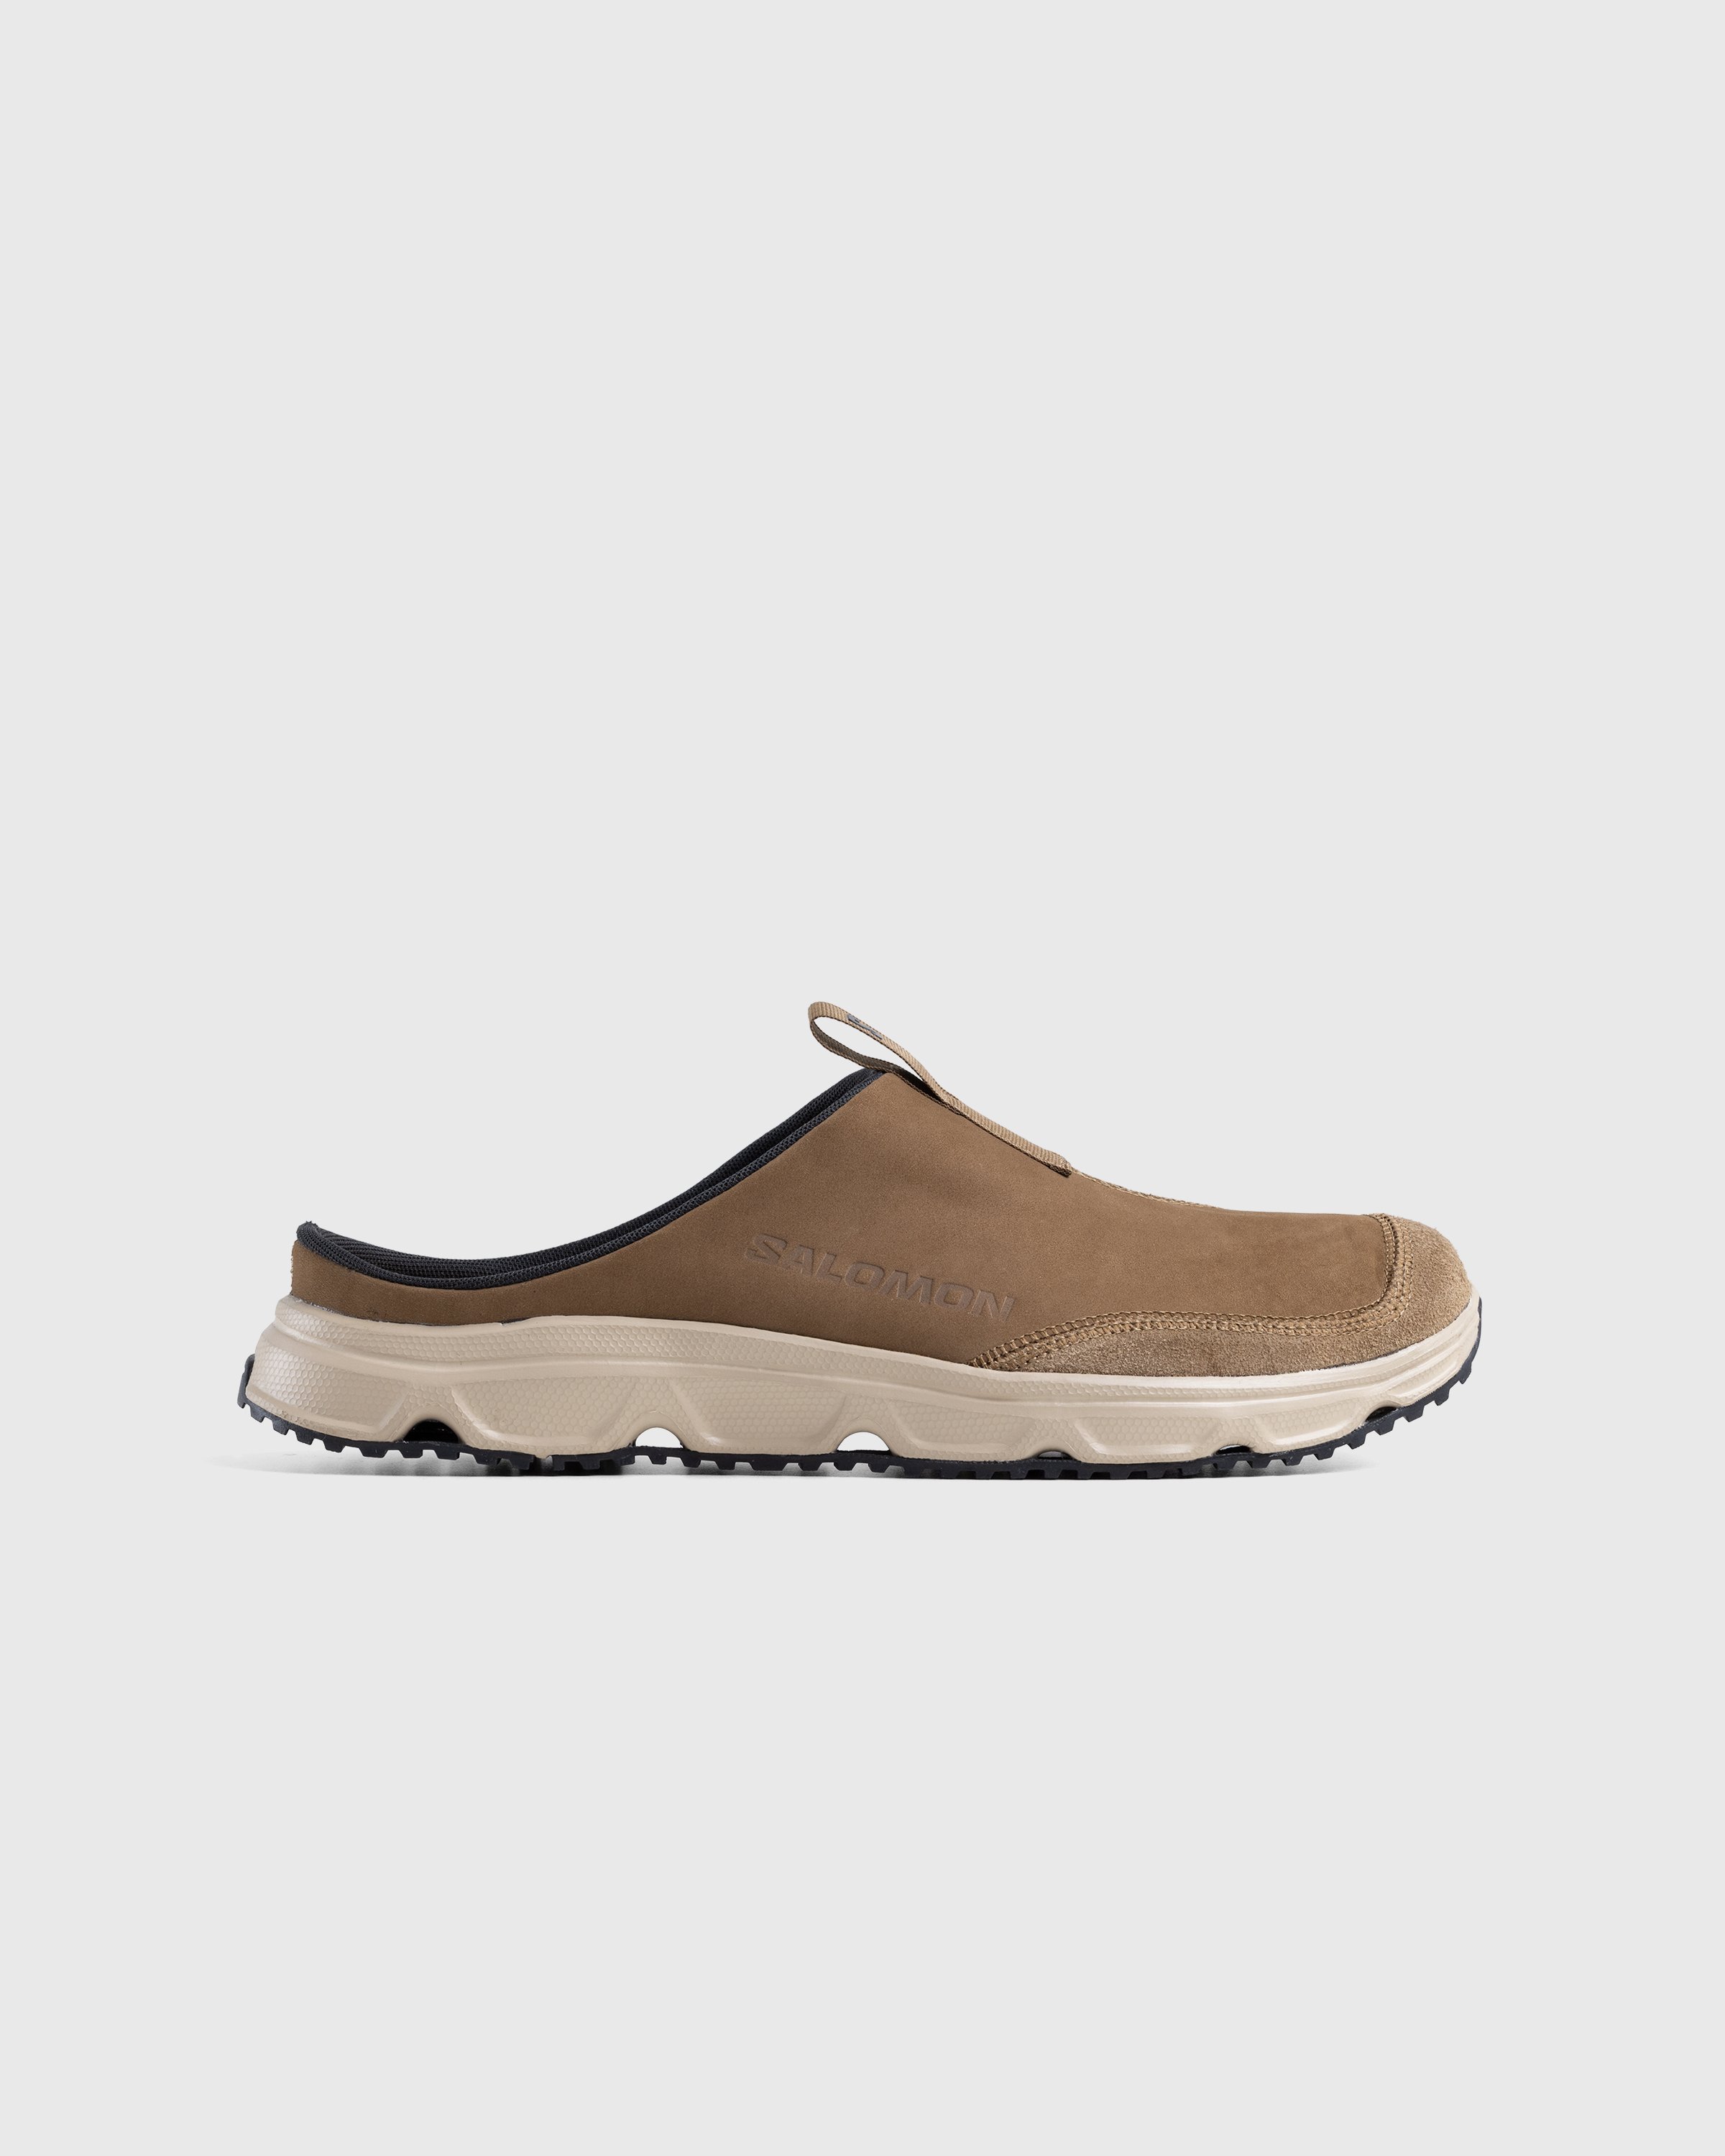 Salomon - RX Slide Leather Advanced Kang/Safari - Footwear - Beige - Image 1